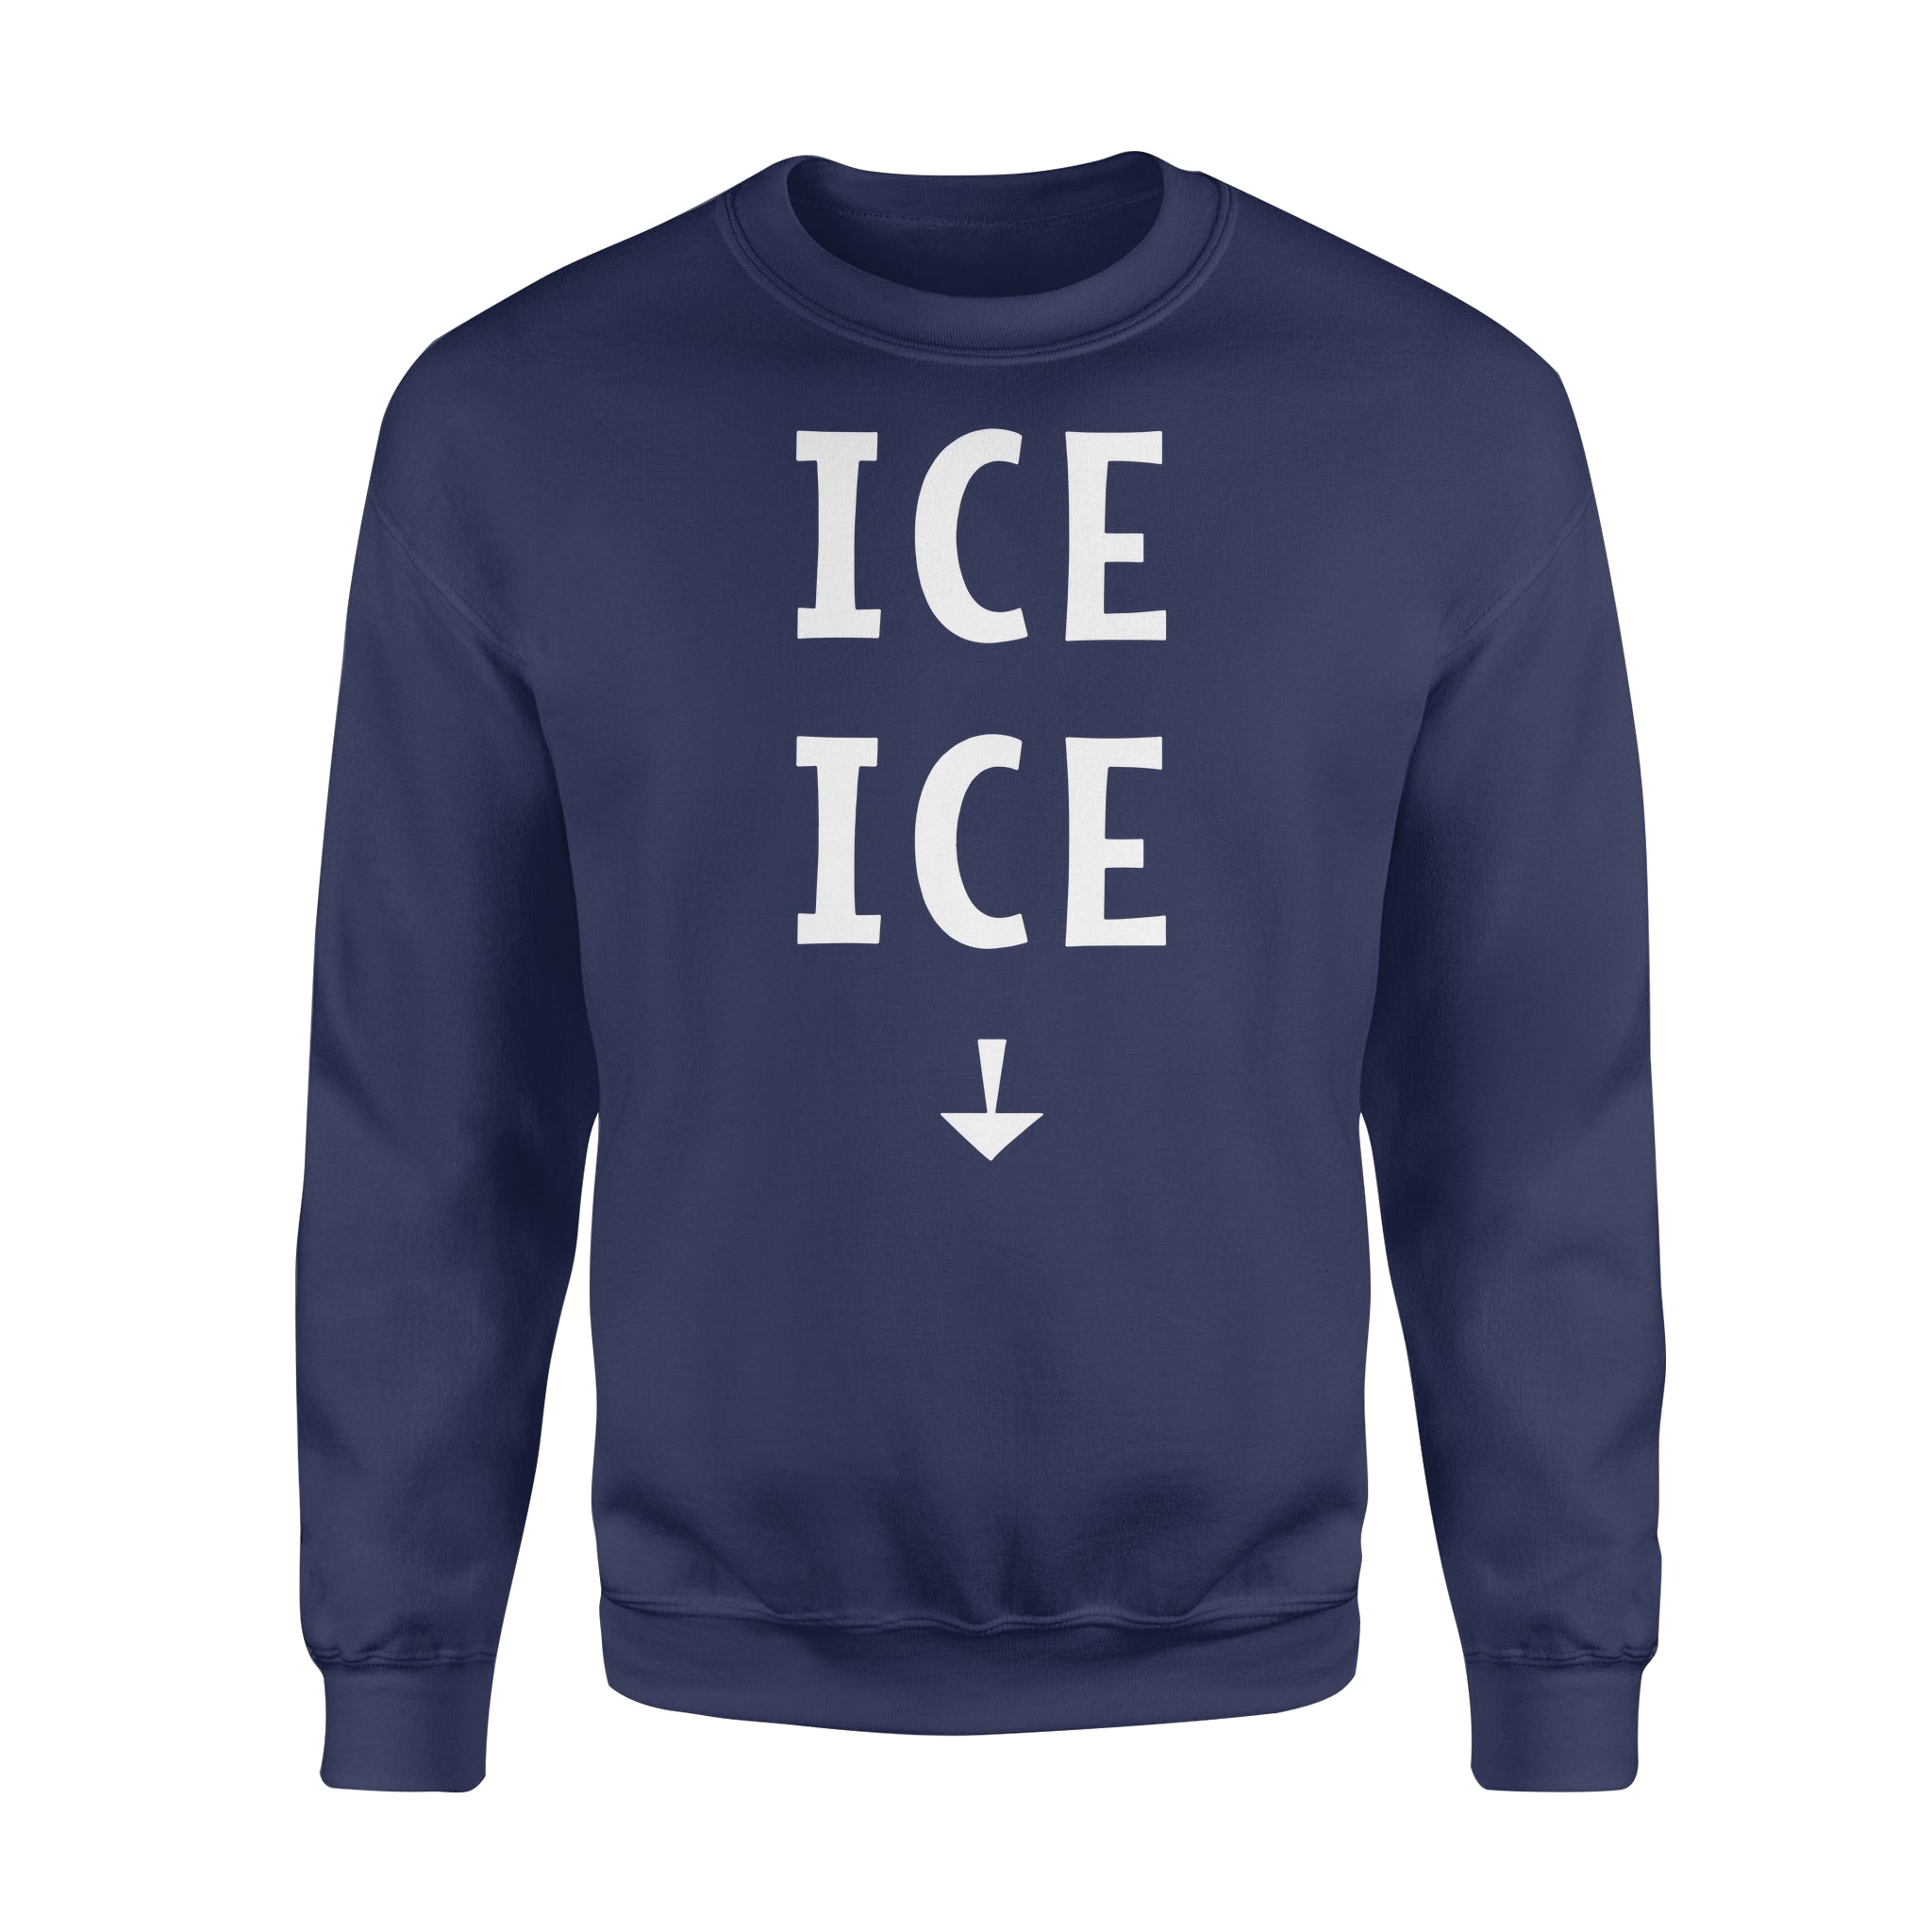 Ice Ice Baby Pregnancy Announcement - Standard Crew Neck Sweatshirt